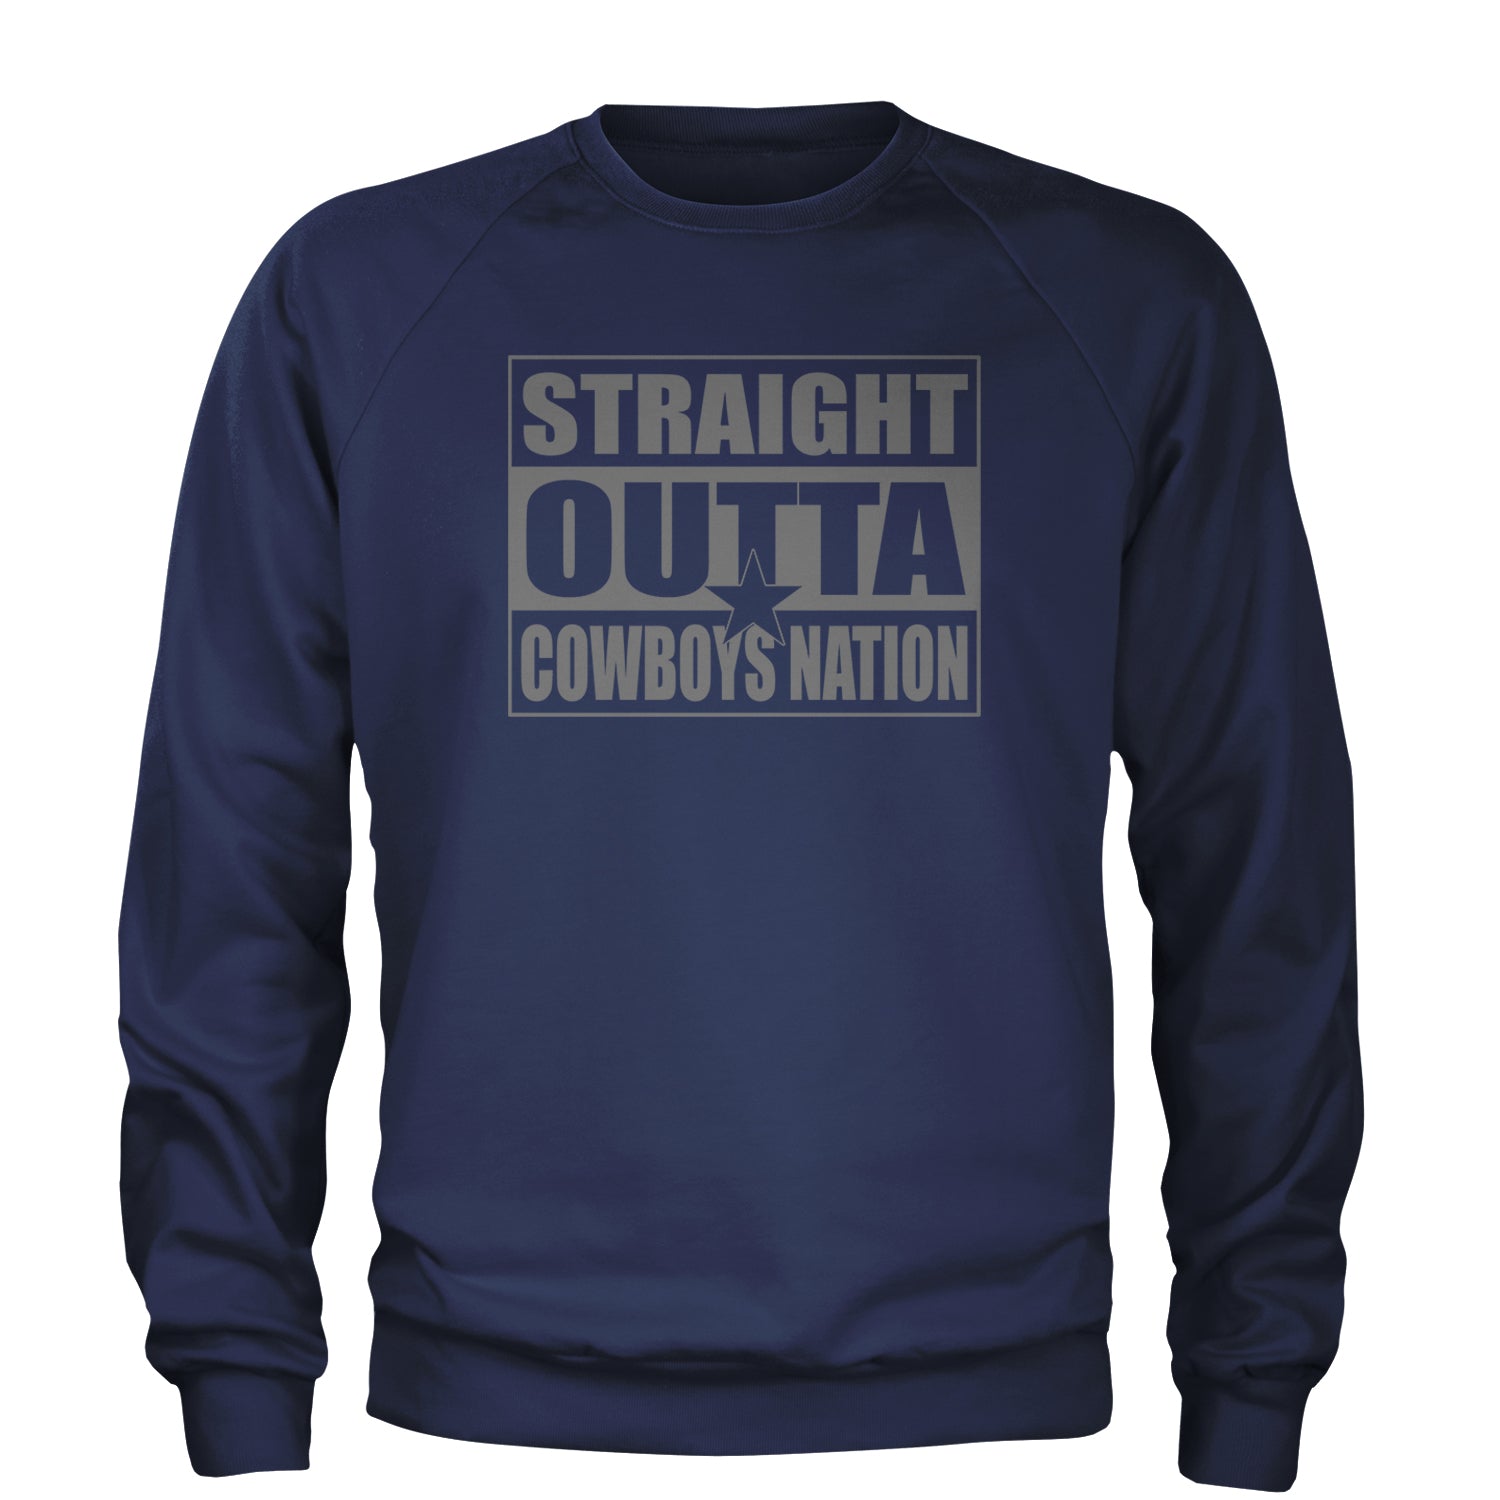 Straight Outta Cowboys Nation Adult Crewneck Sweatshirt